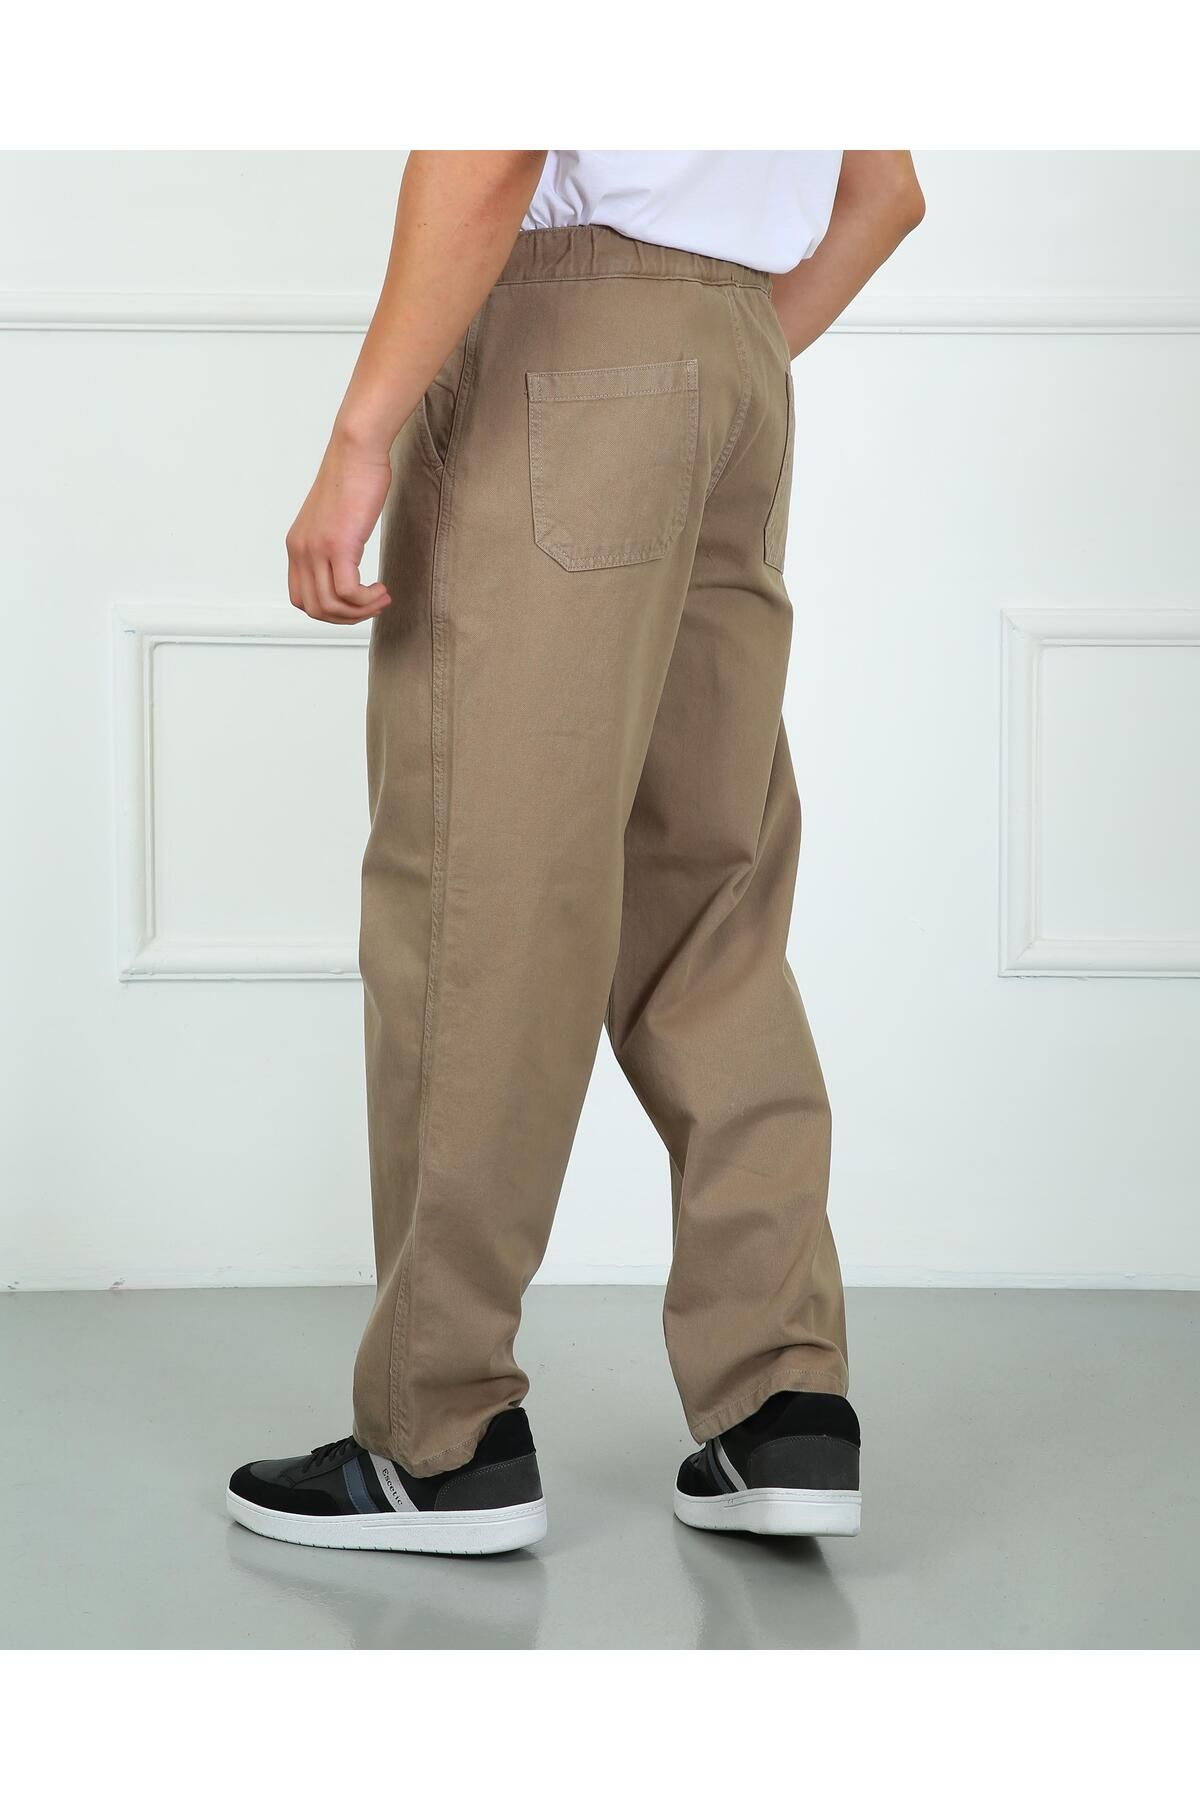 Twister Jeans Erkek Pantolon Baggy Plus 719-01 Mocha